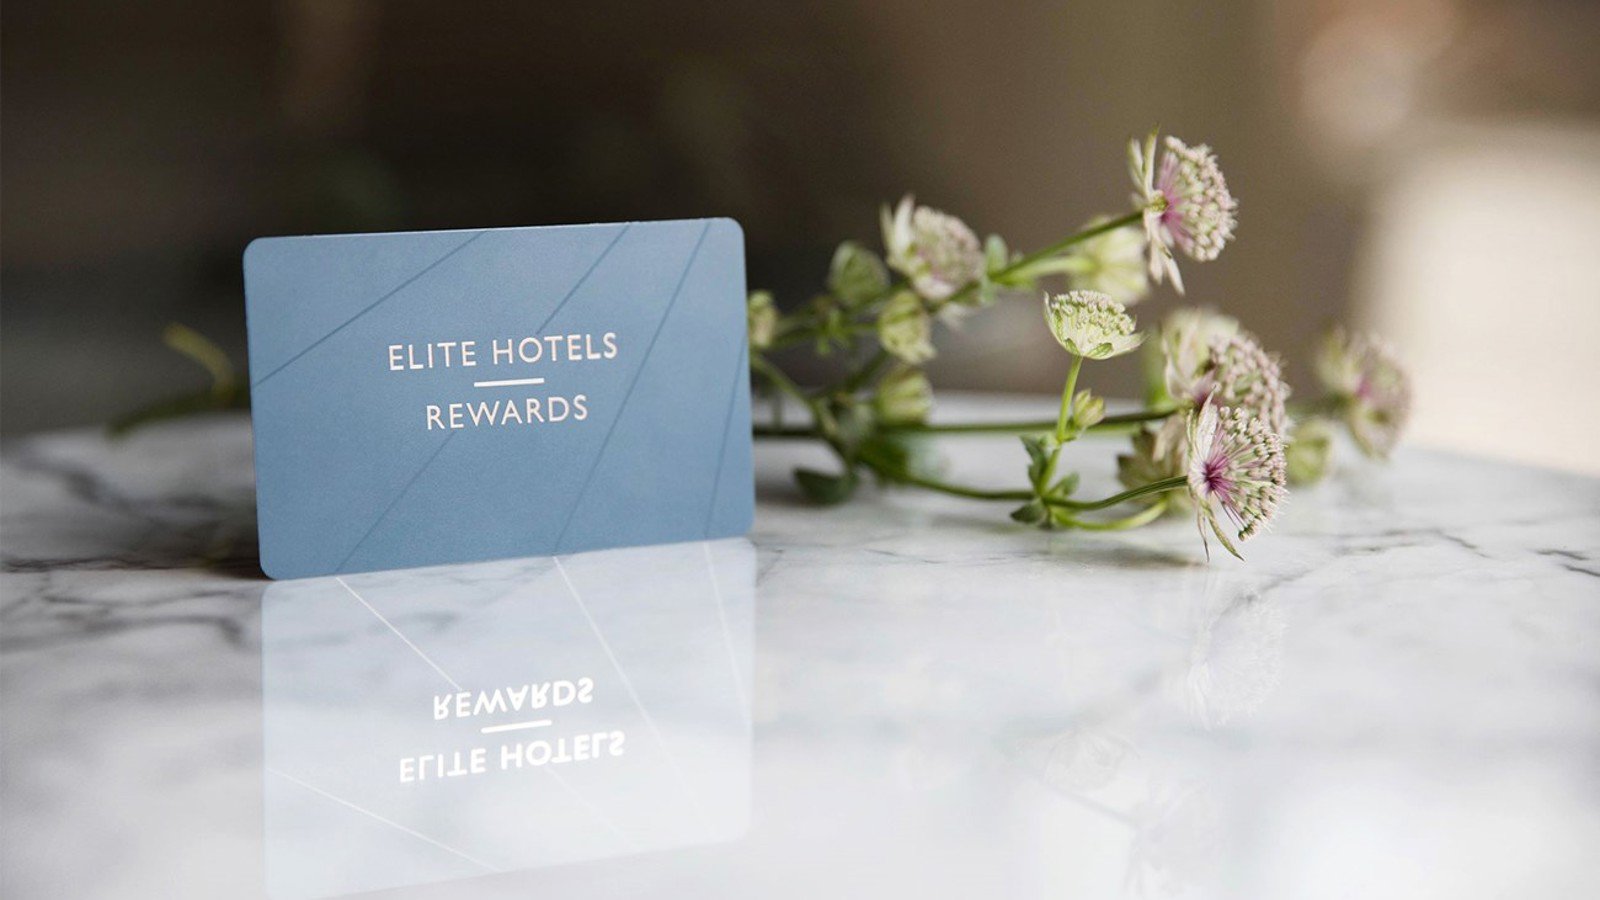 Elite hotels rewards kort.